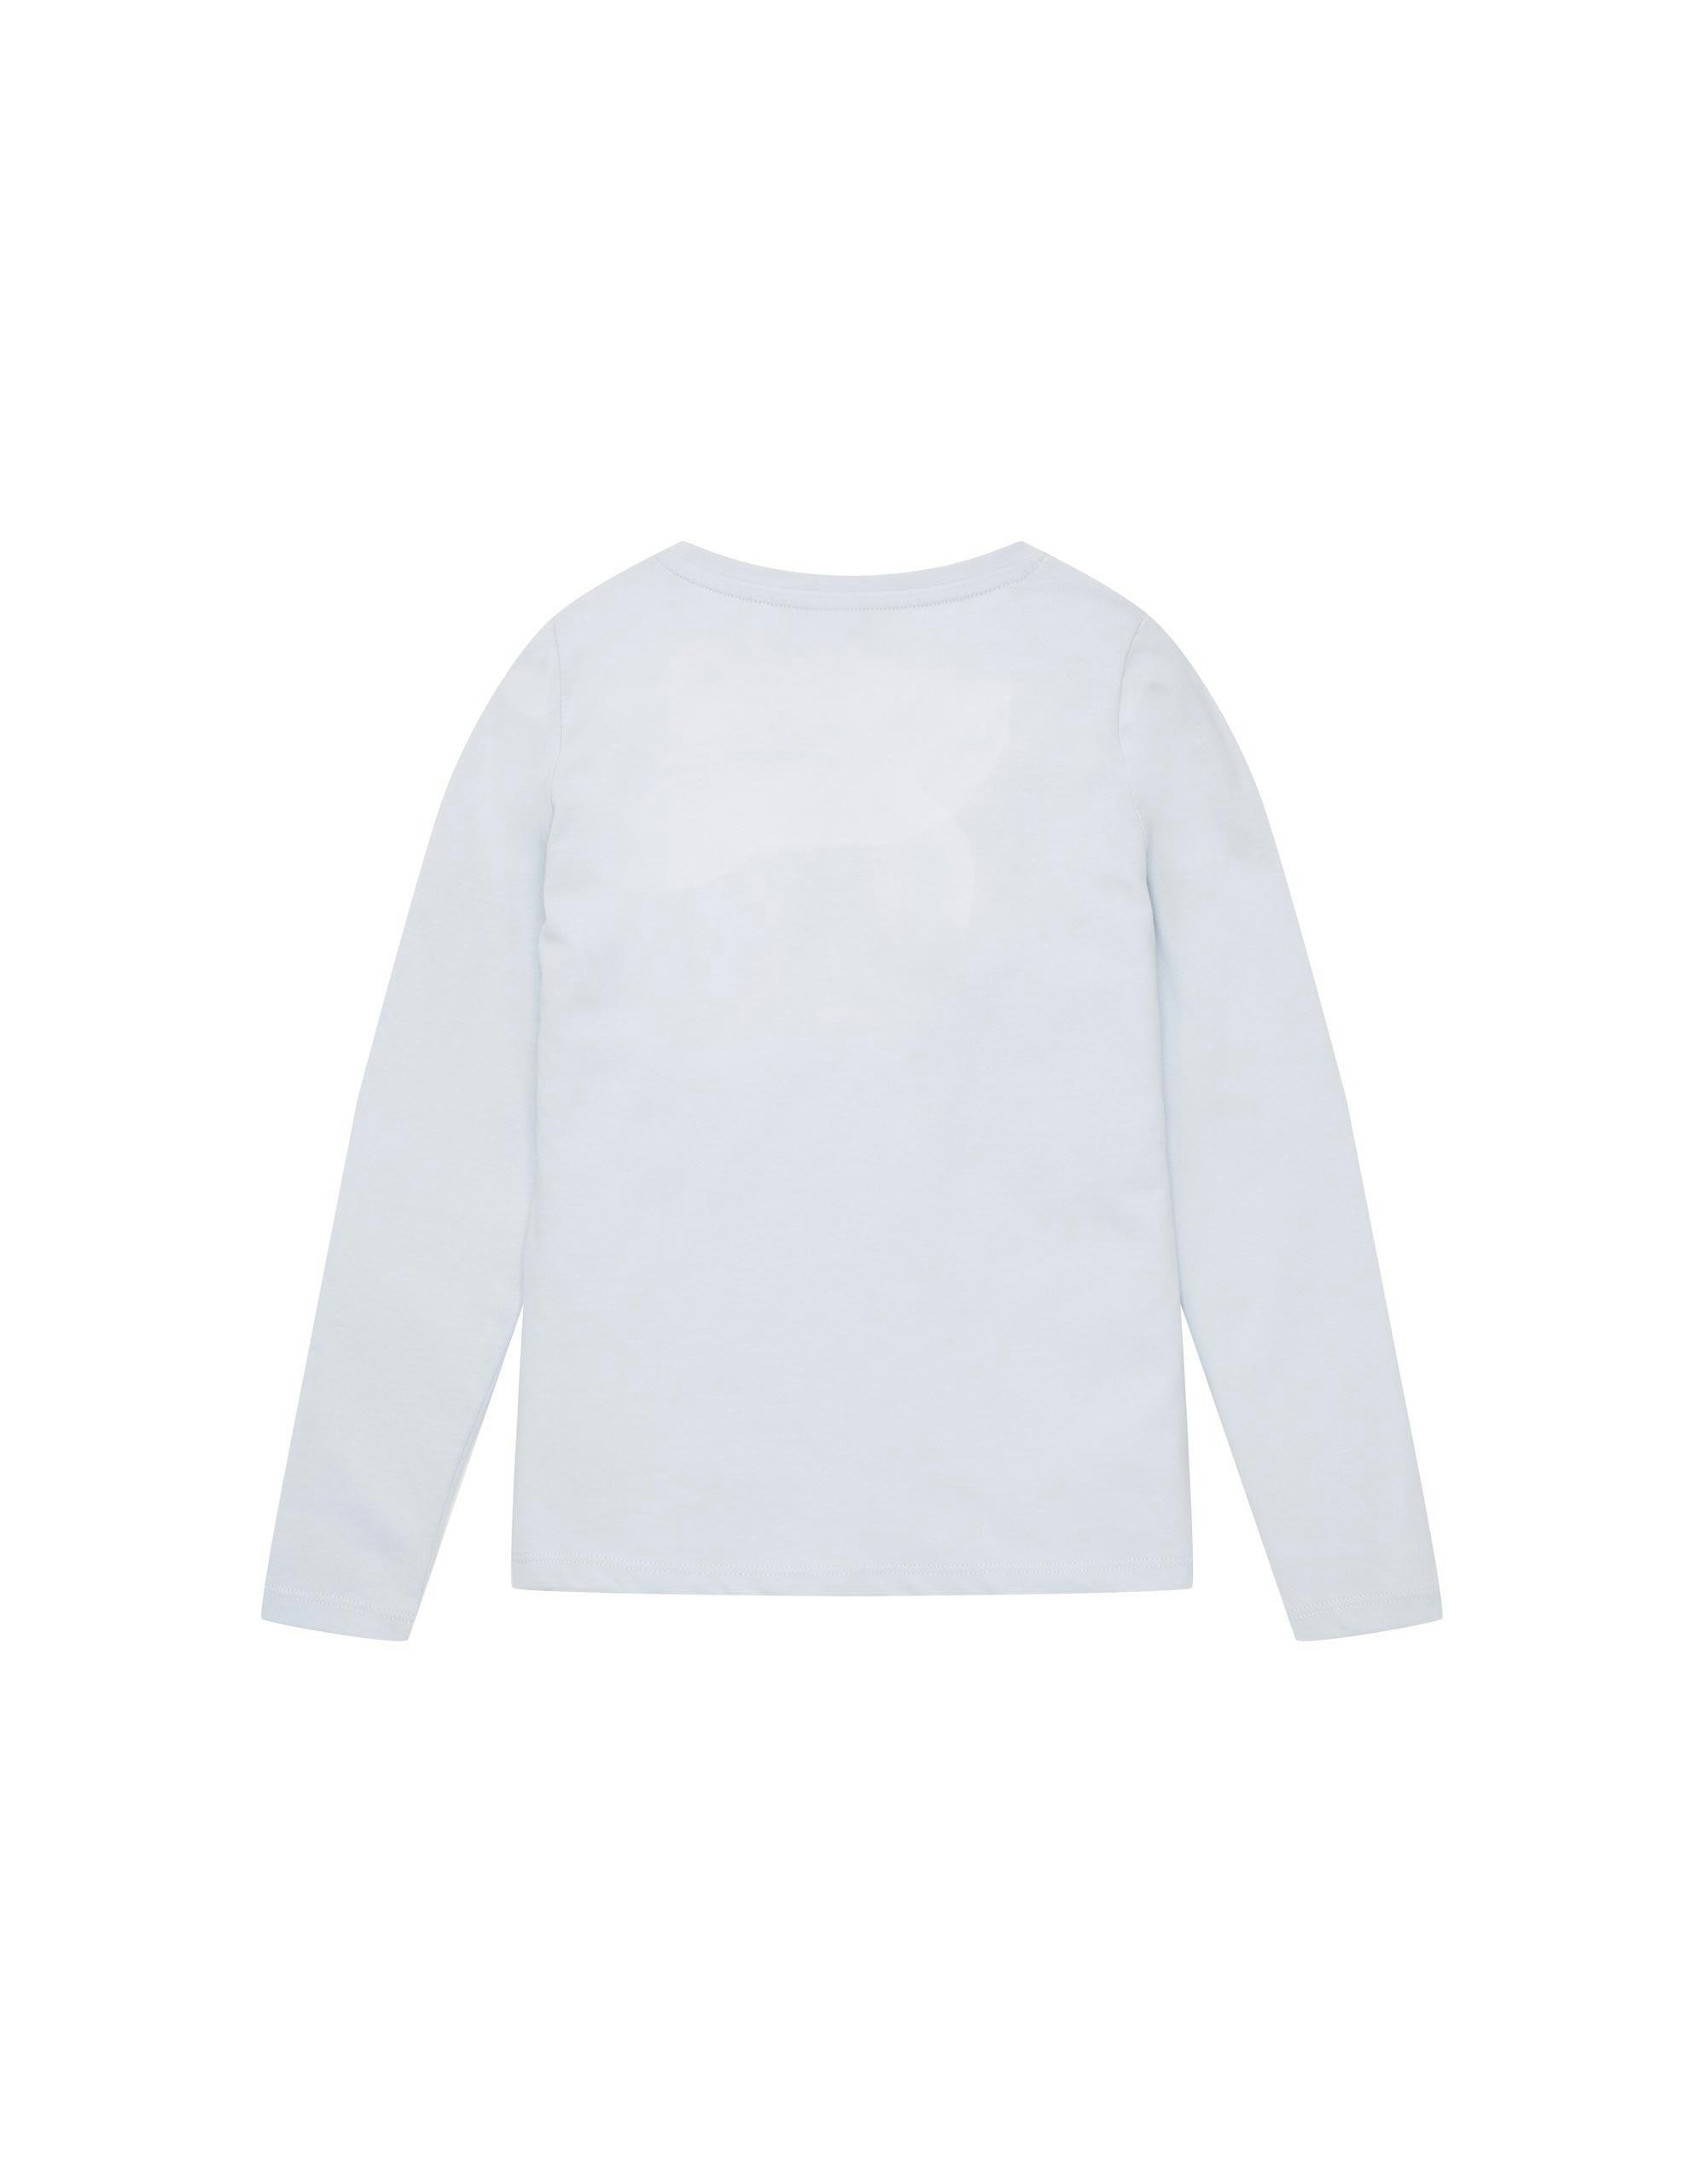 Sfera Bluse Rosa/Grau/Weiß 8Y Rabatt 98 % KINDER Hemden & T-Shirts Glitzer 